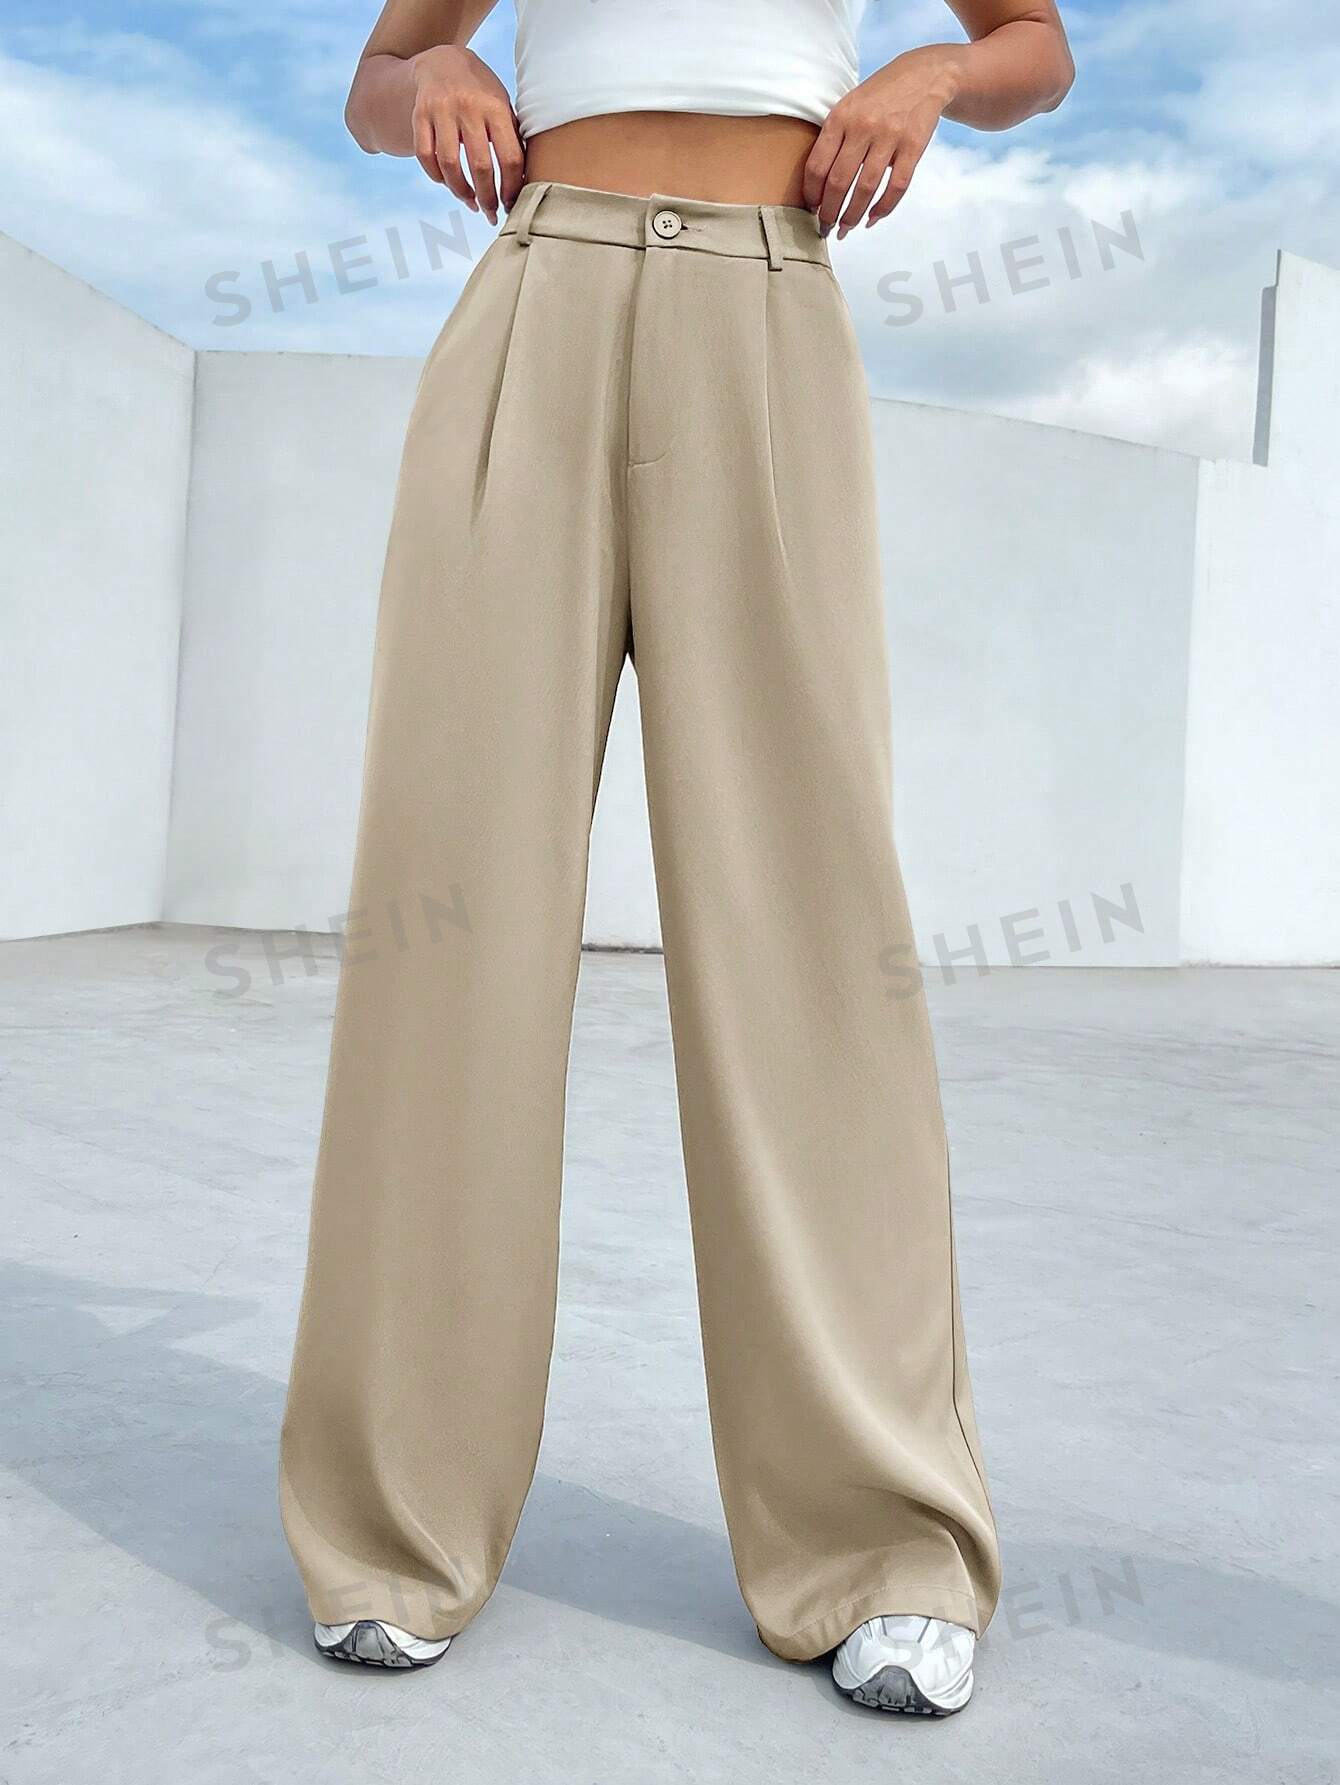 SHEIN EZwear Женские тканые широкие брюки со складками и складками, хаки фото